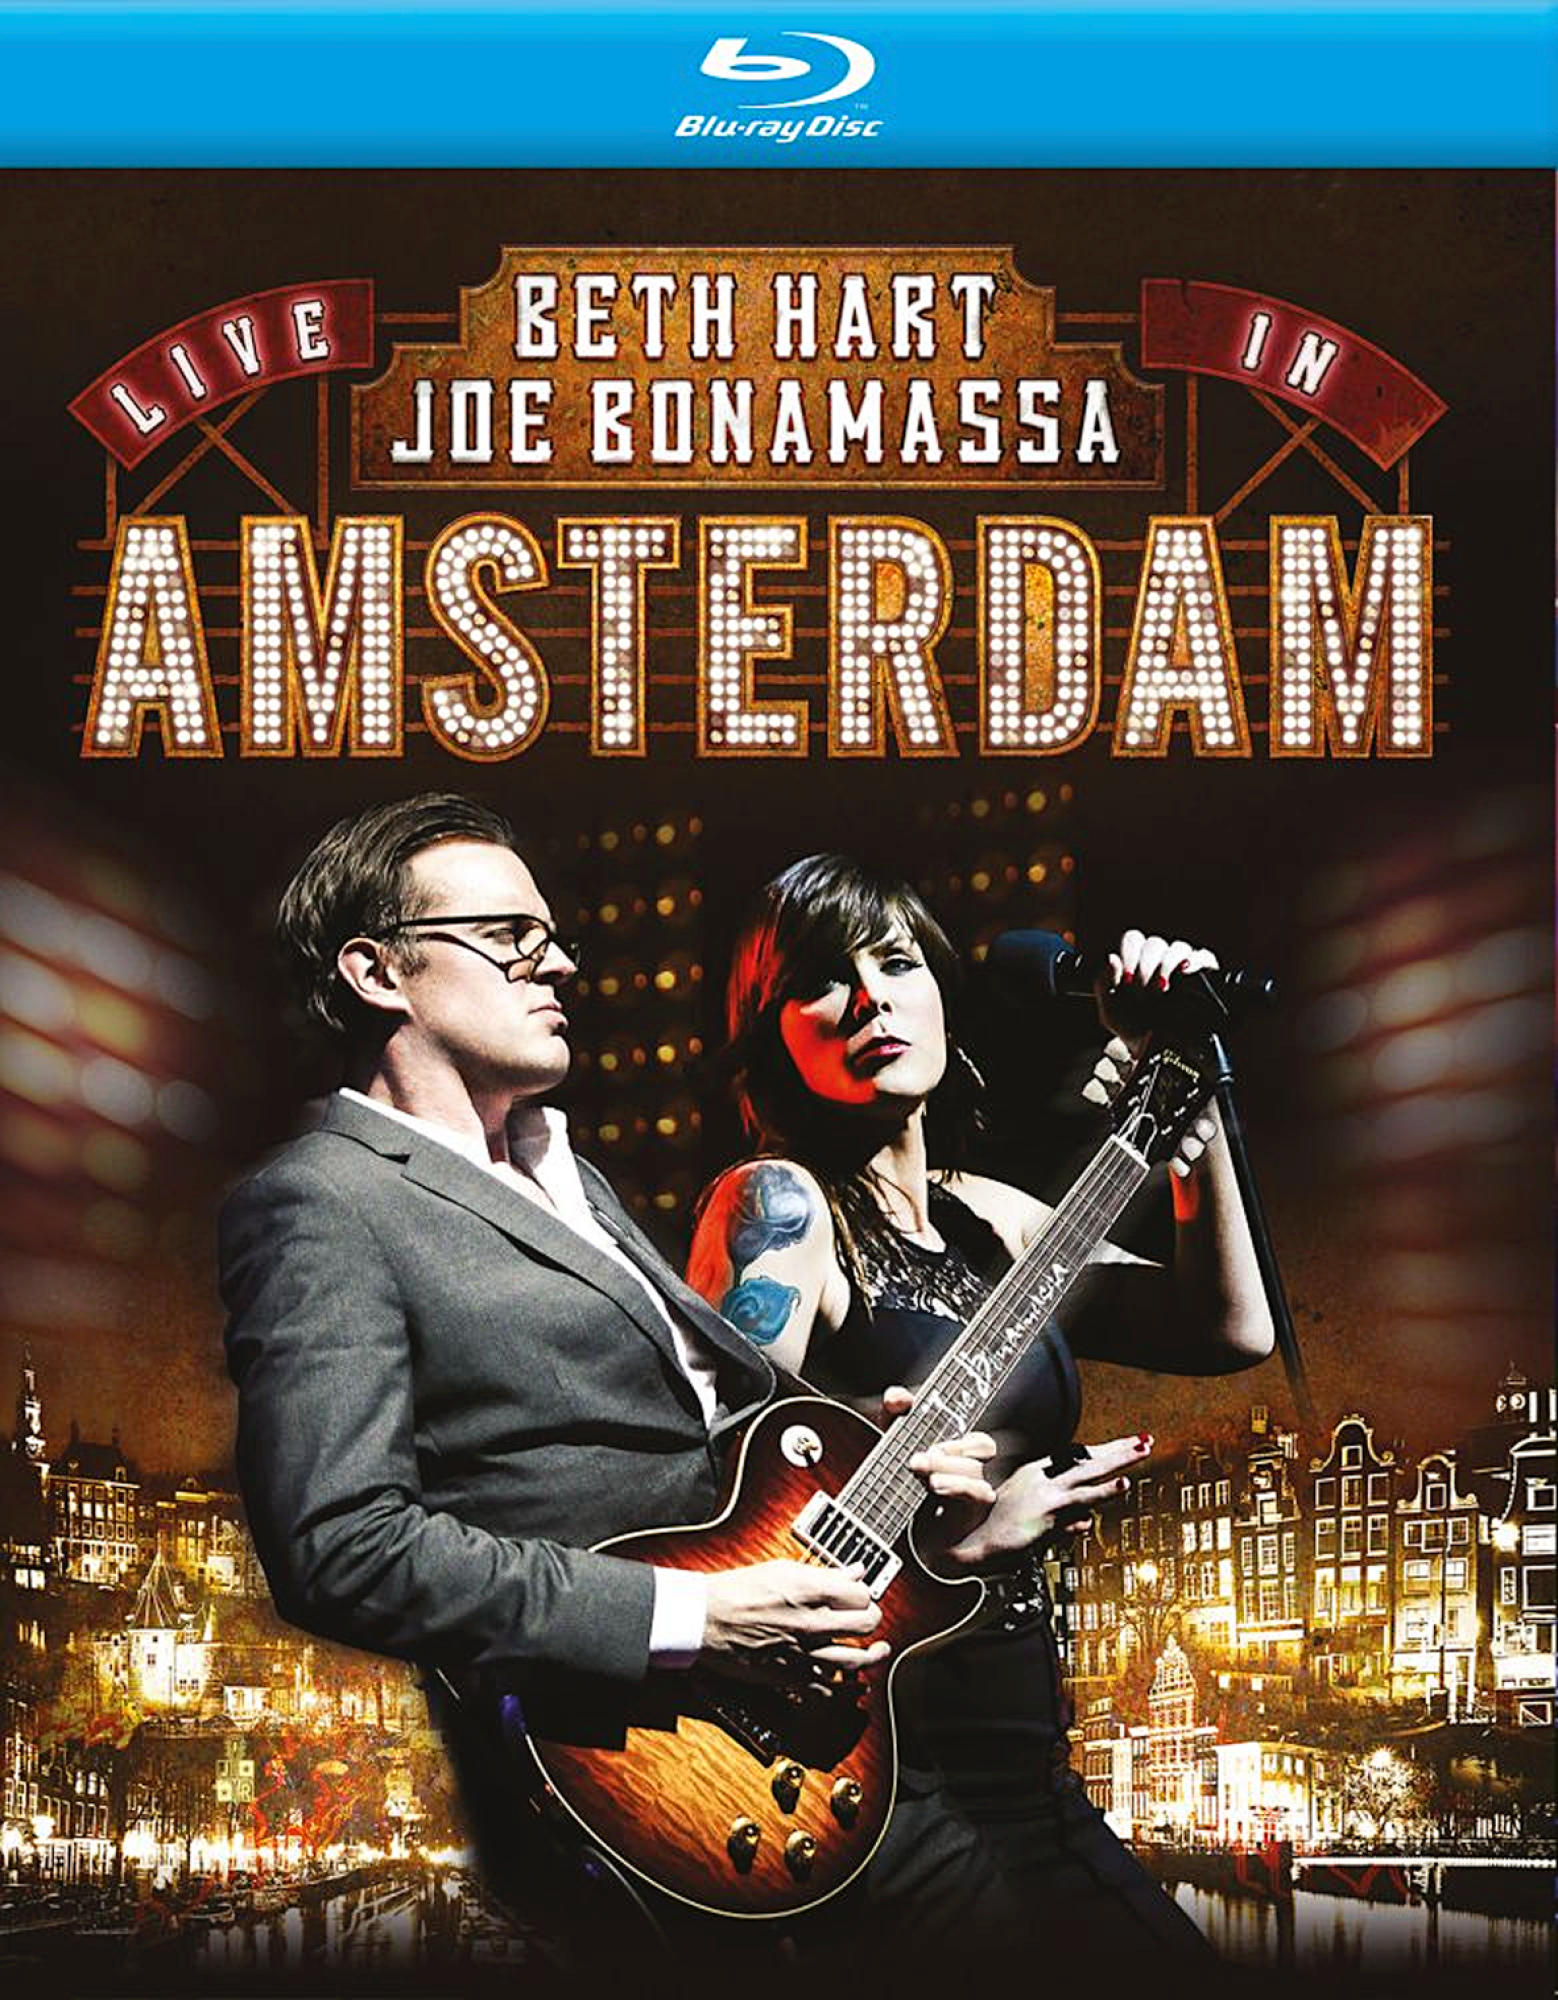 Beth In Joe Amsterdam (Blu-ray) - Bonamassa - Live Hart,